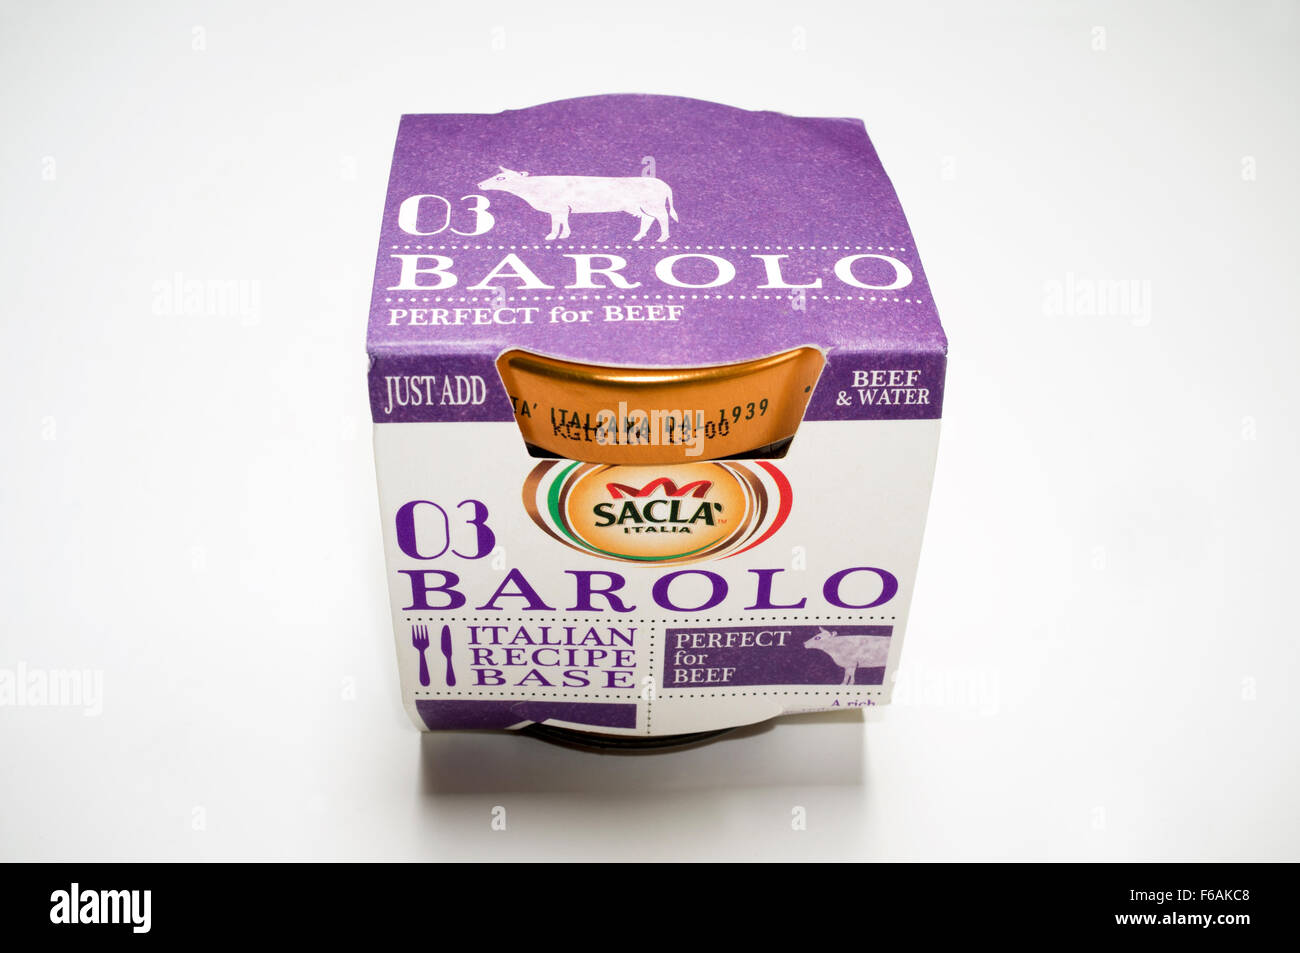 Sacla 03 Barolo italienisches Rezept Basis Stockfoto